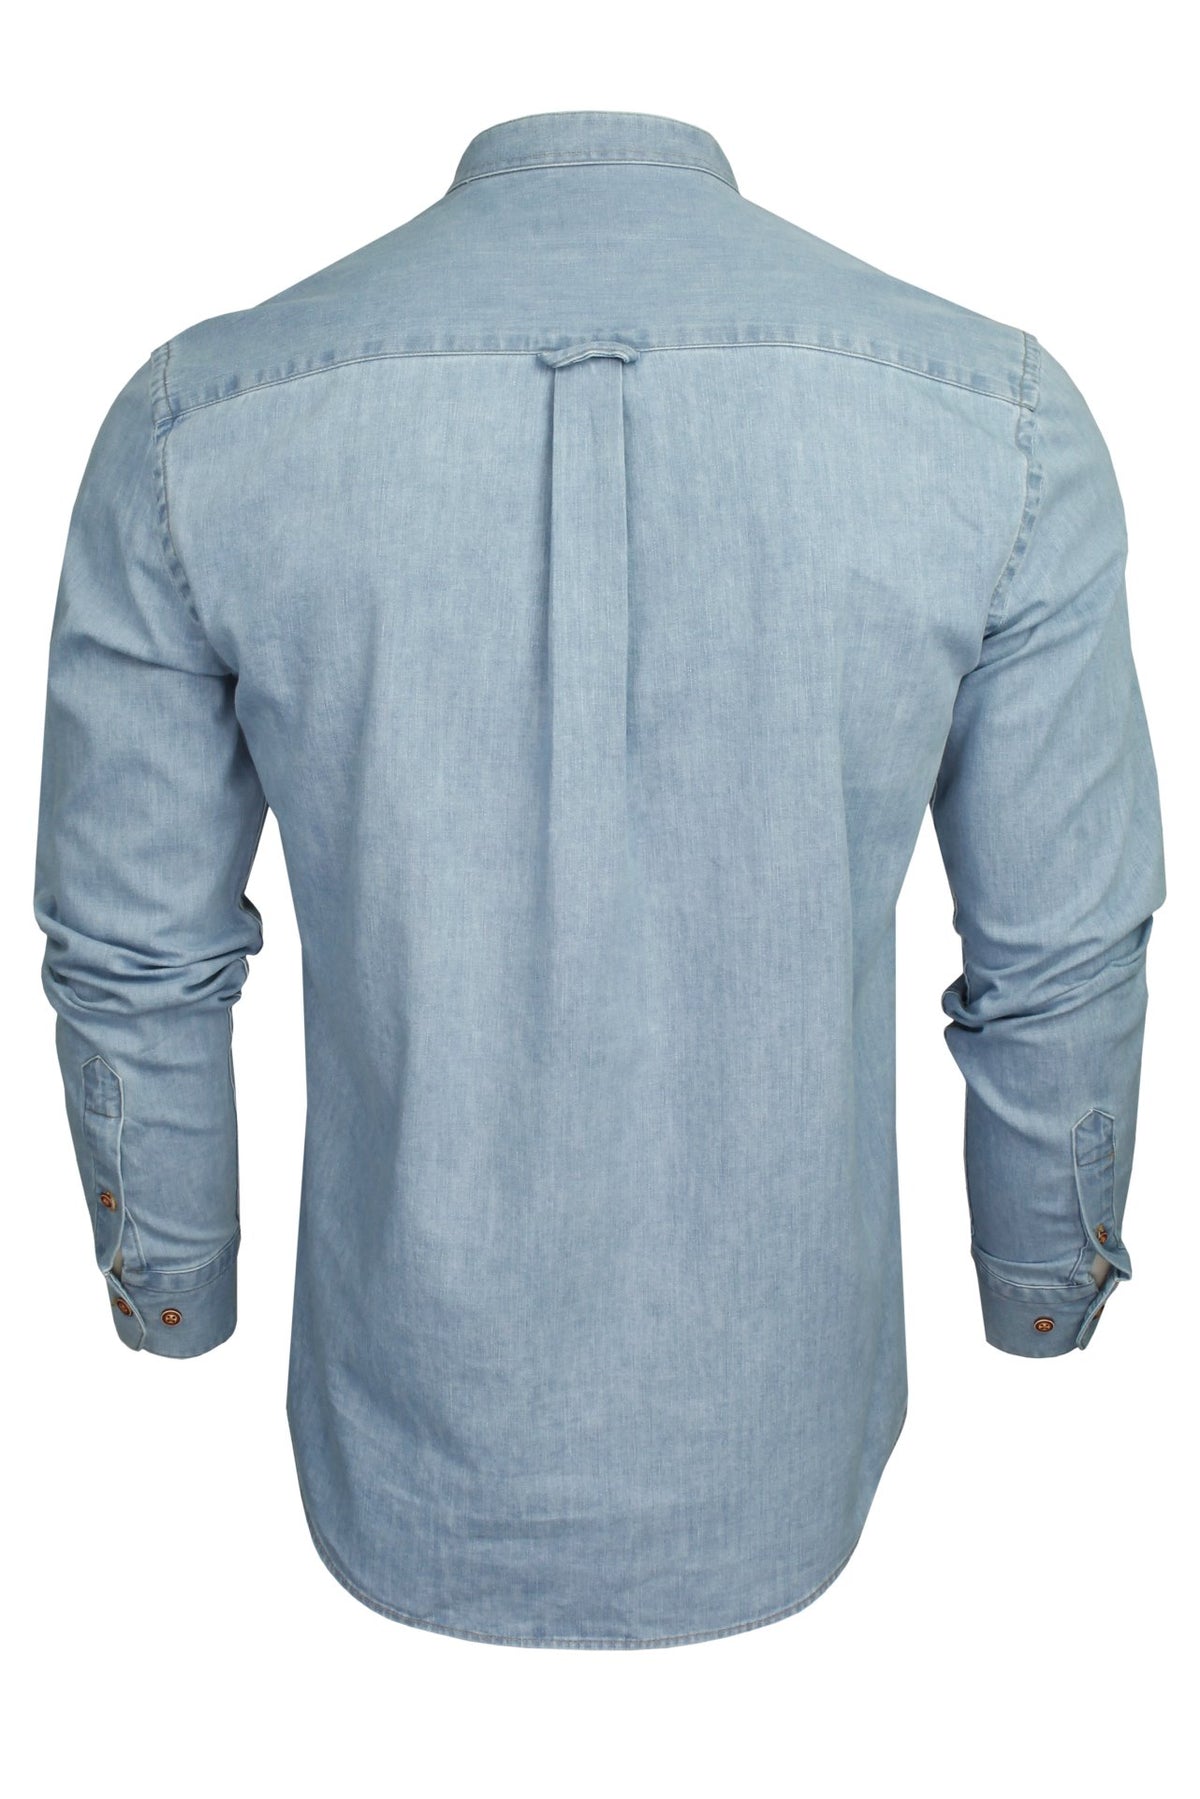 Xact Mens 6.6 oz Denim Band / Grandad Collar Shirt - Long Sleeved, 03, Xsh1173, Light Blue Denim